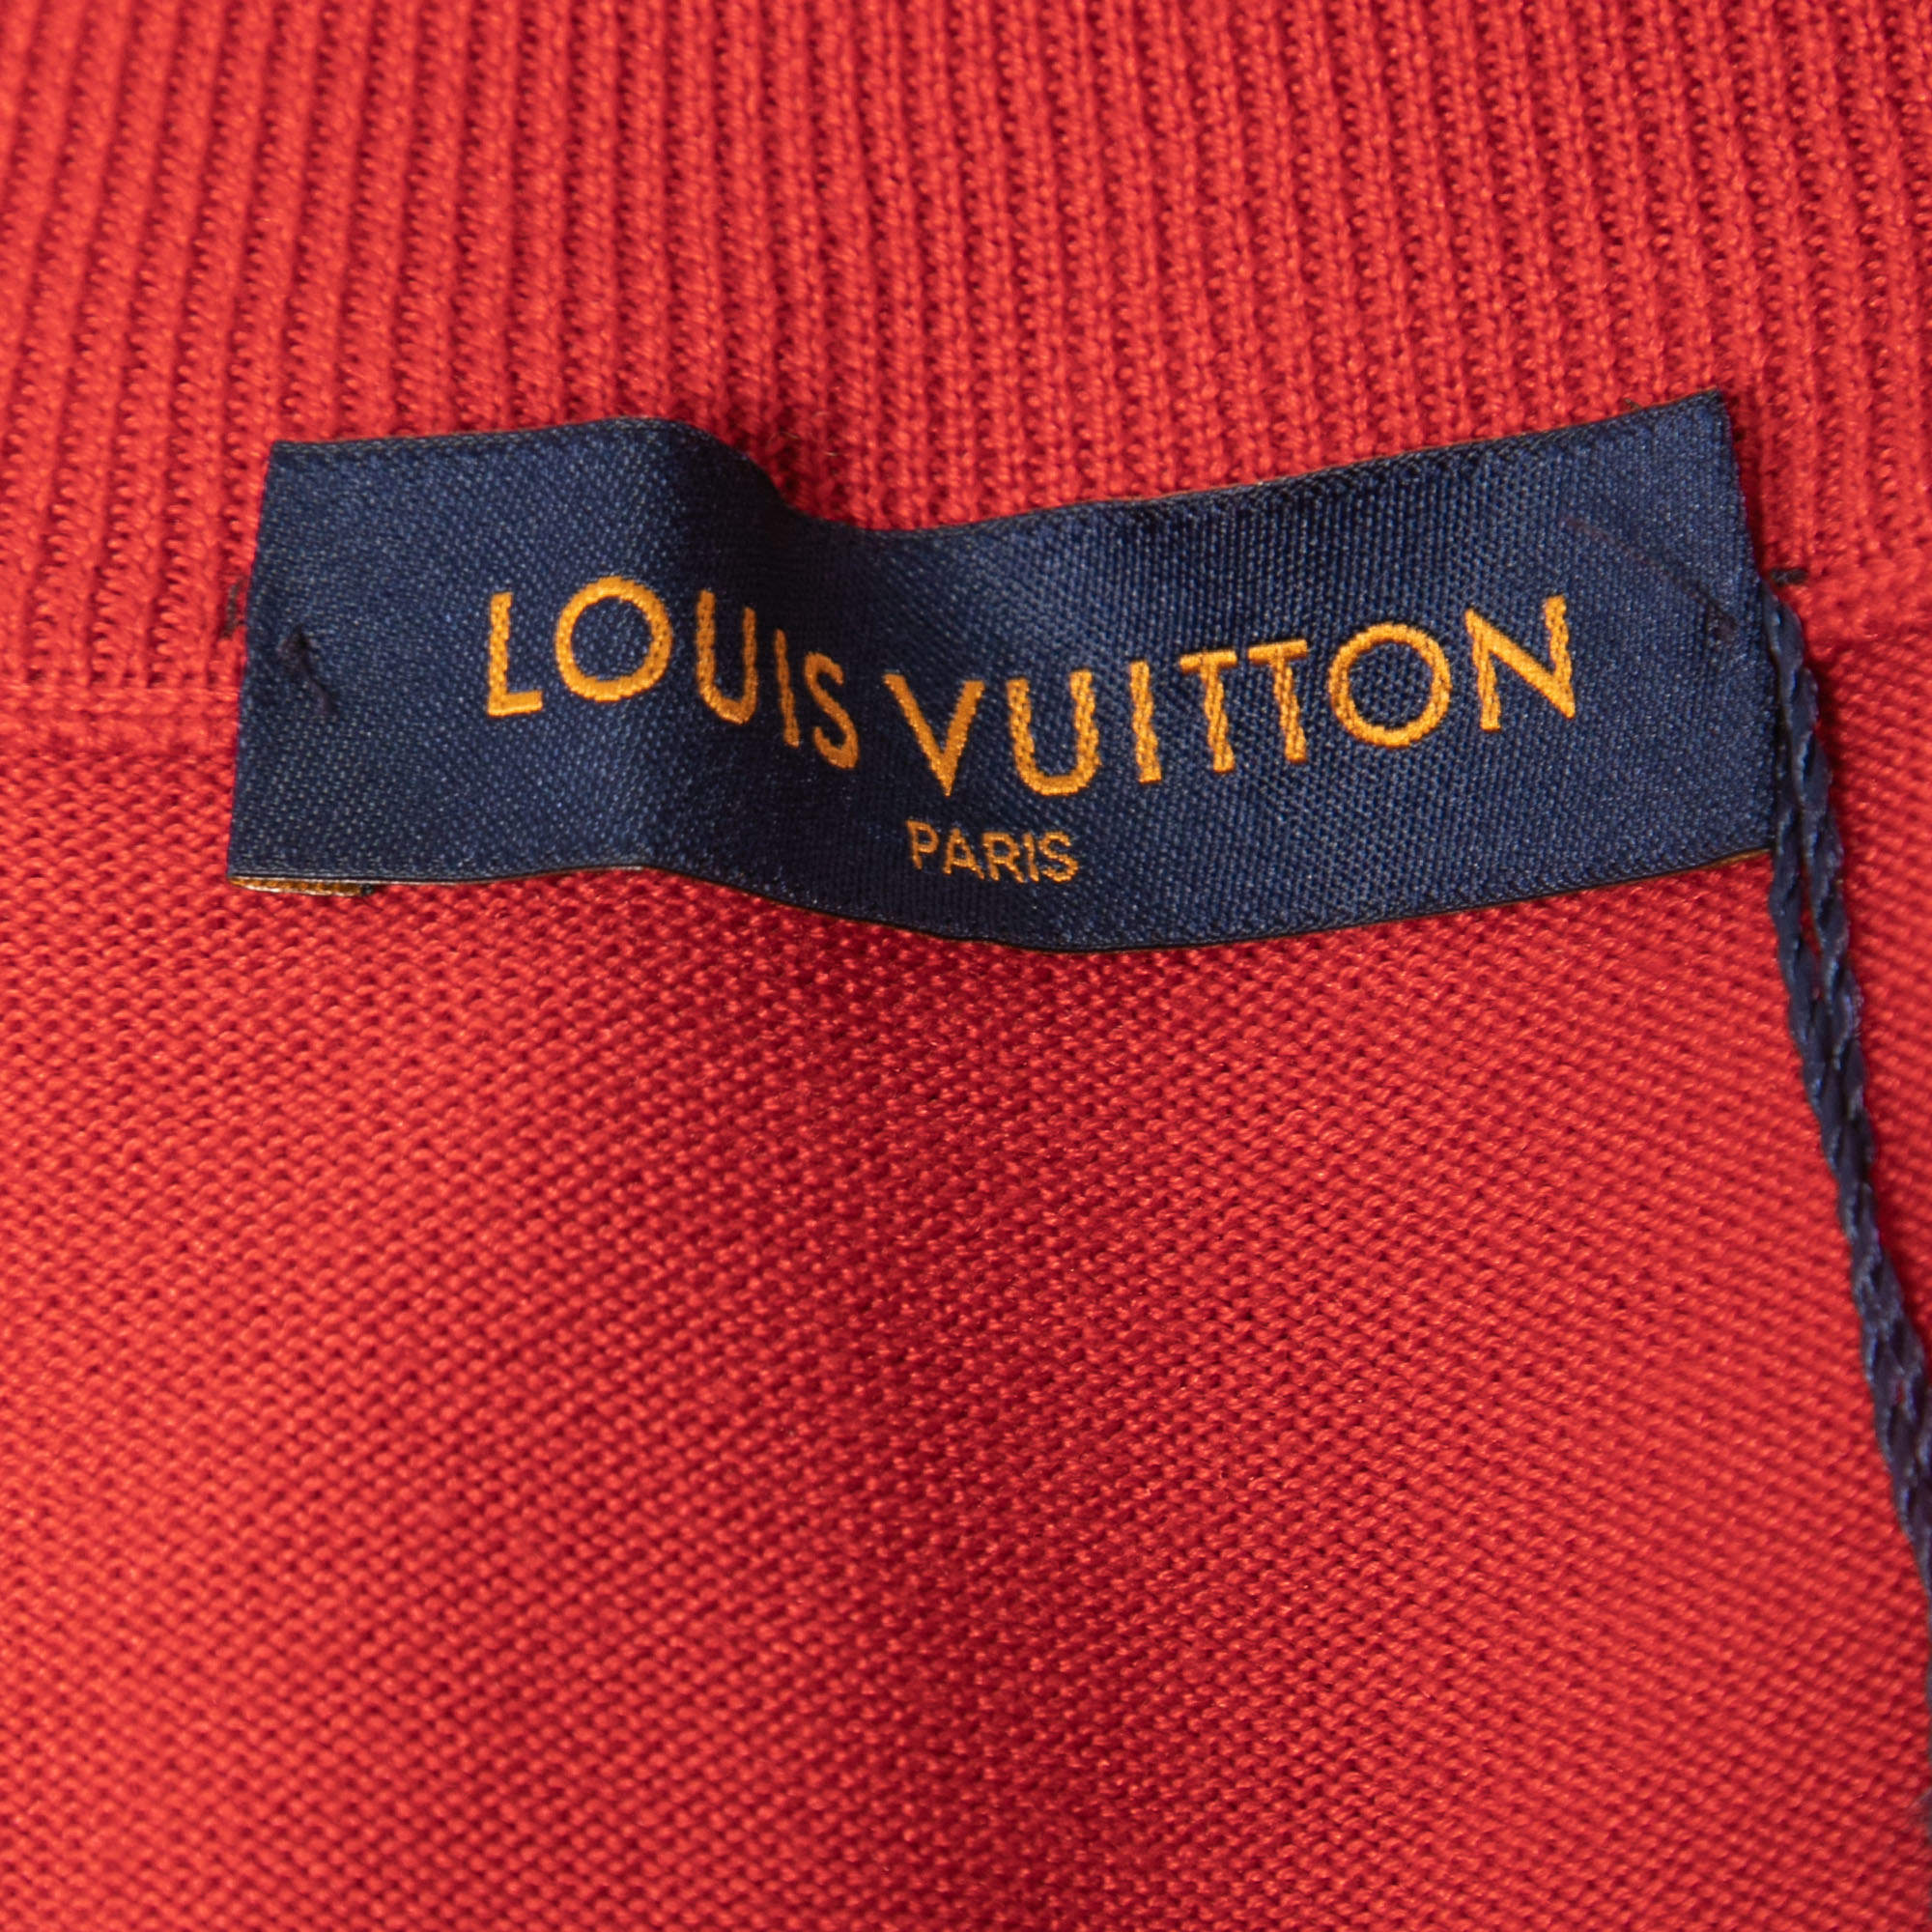 Louis Vuitton Red Wool and Silk Blend Zip-Up Jacket L Louis